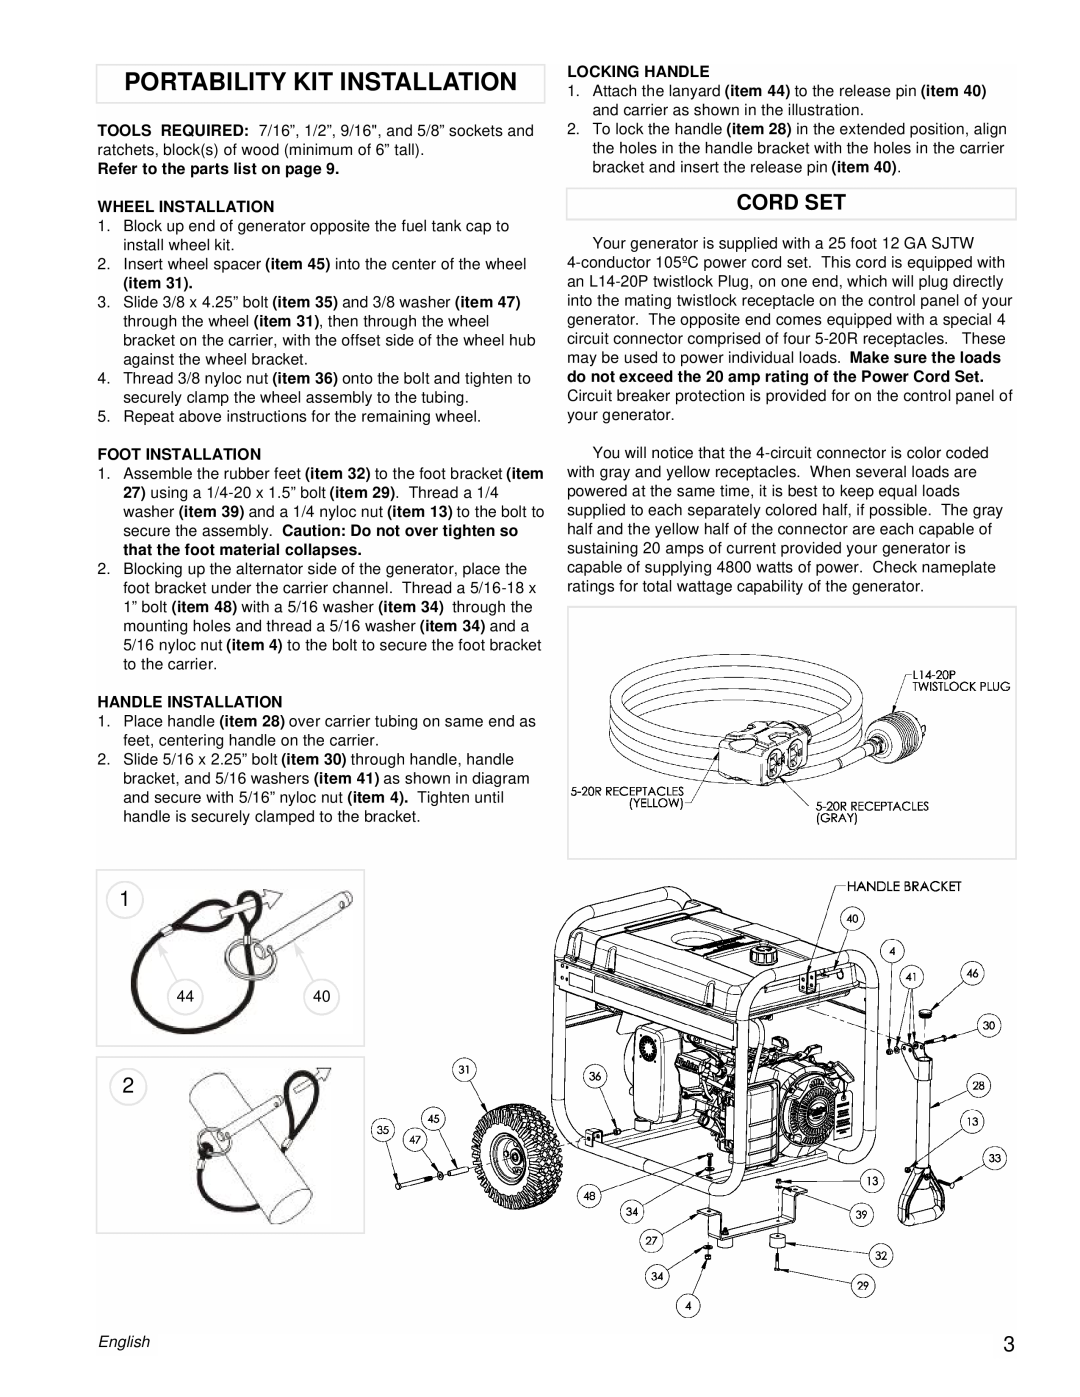 Powermate PM0435255 manual Portability Kit Installation, Cord Set, English 